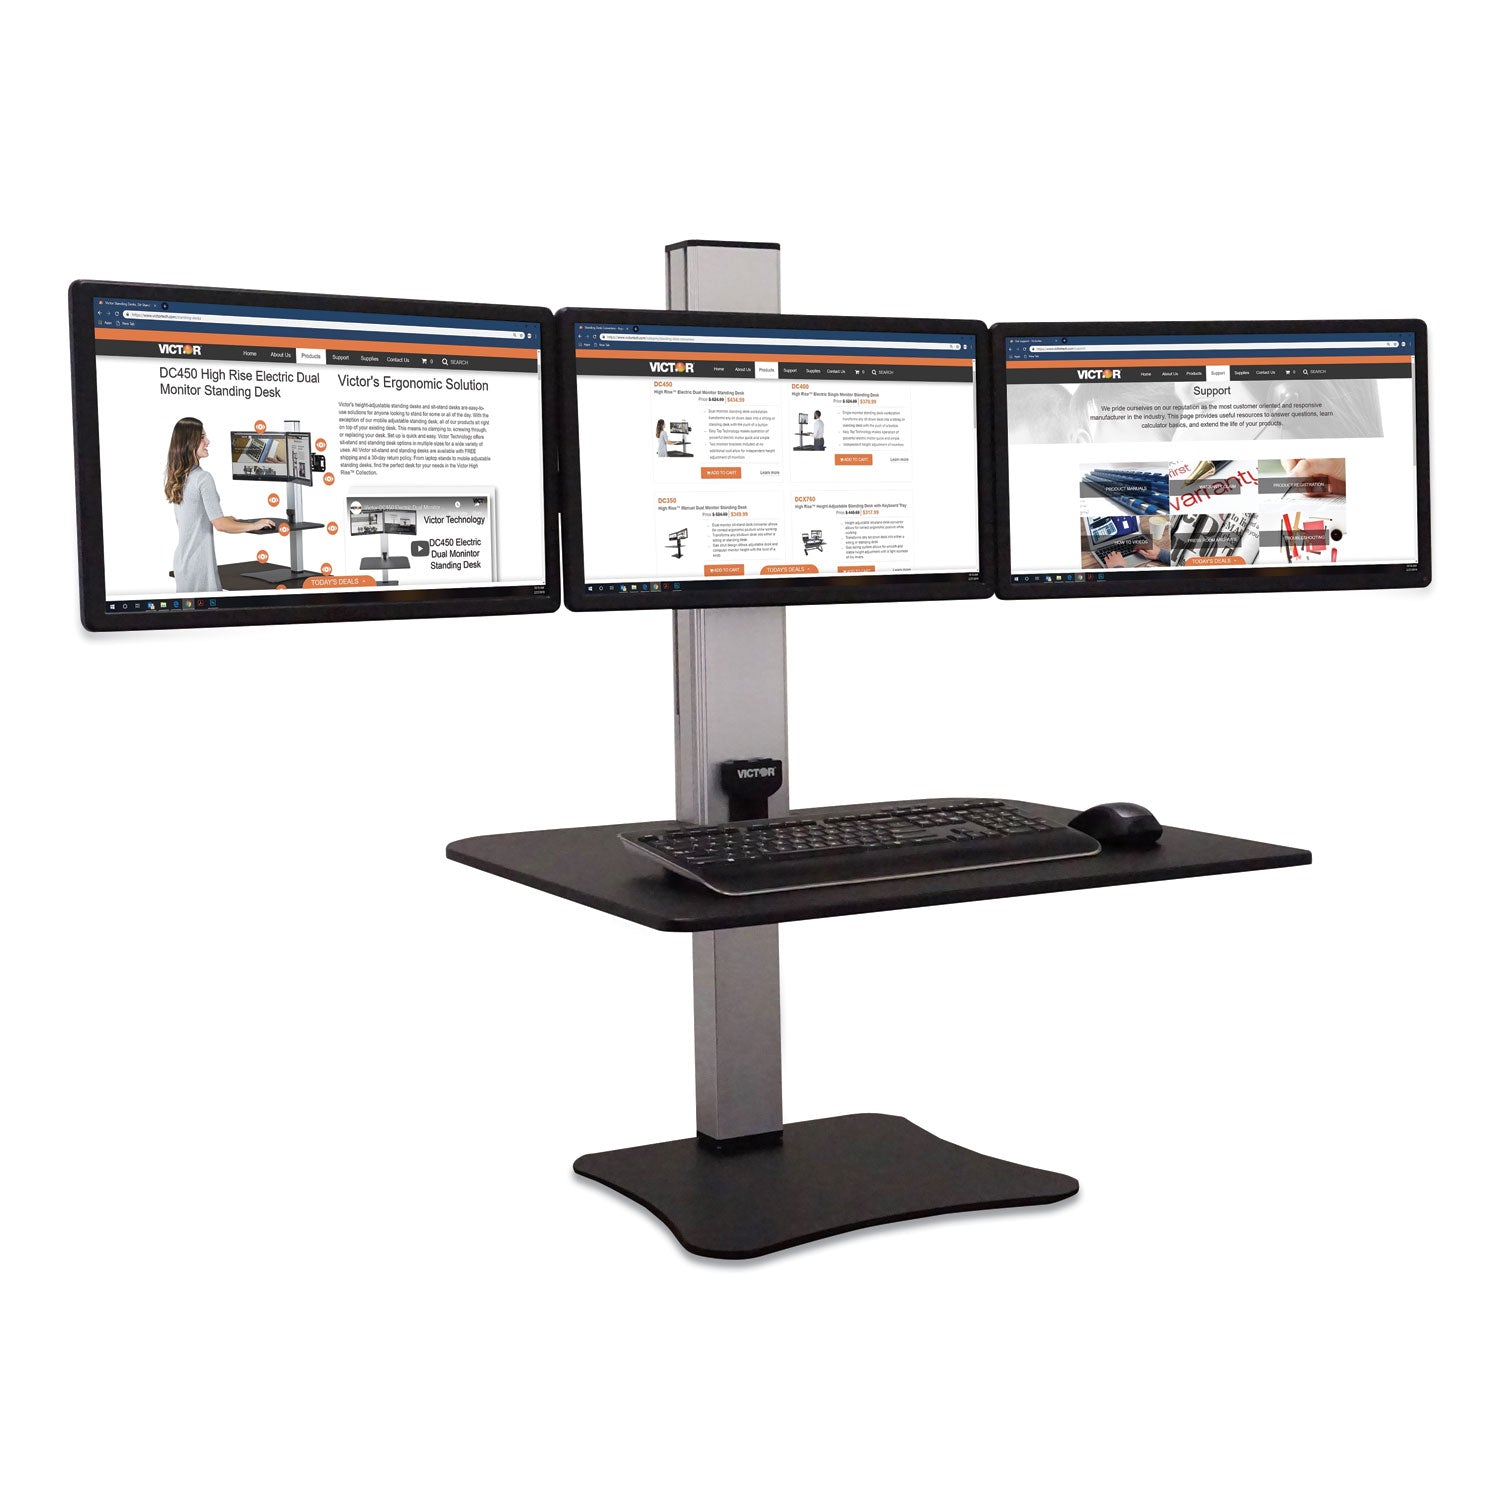 High Rise Electric Triple Monitor Standing Desk Workstation, 28 x 23 x 20, Black/Aluminum